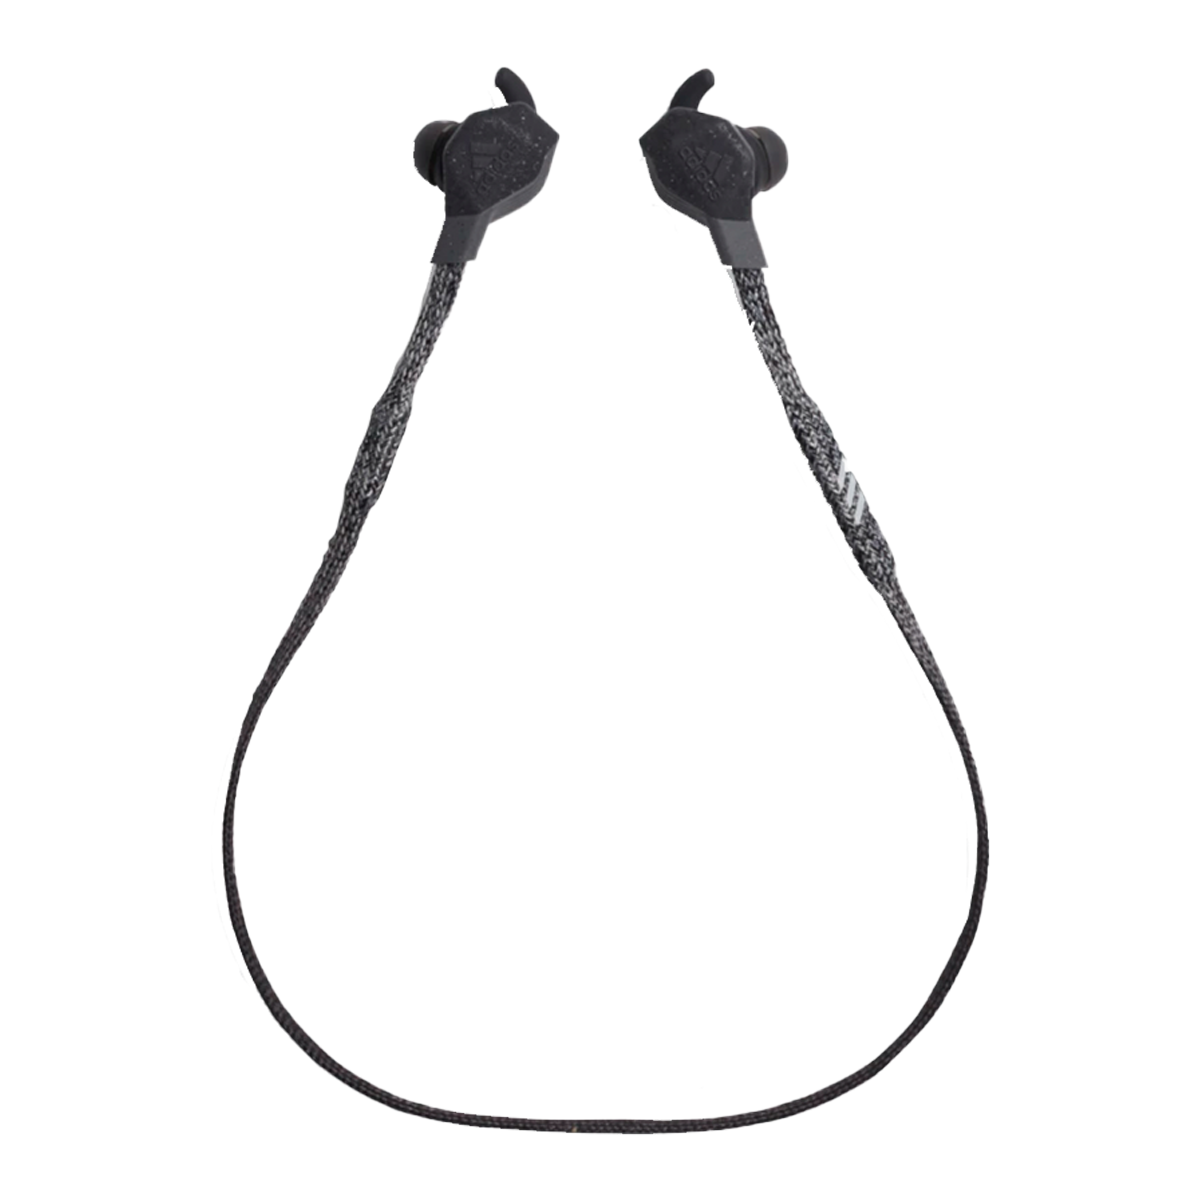 FWD-01 Sport In-Ear Headphones